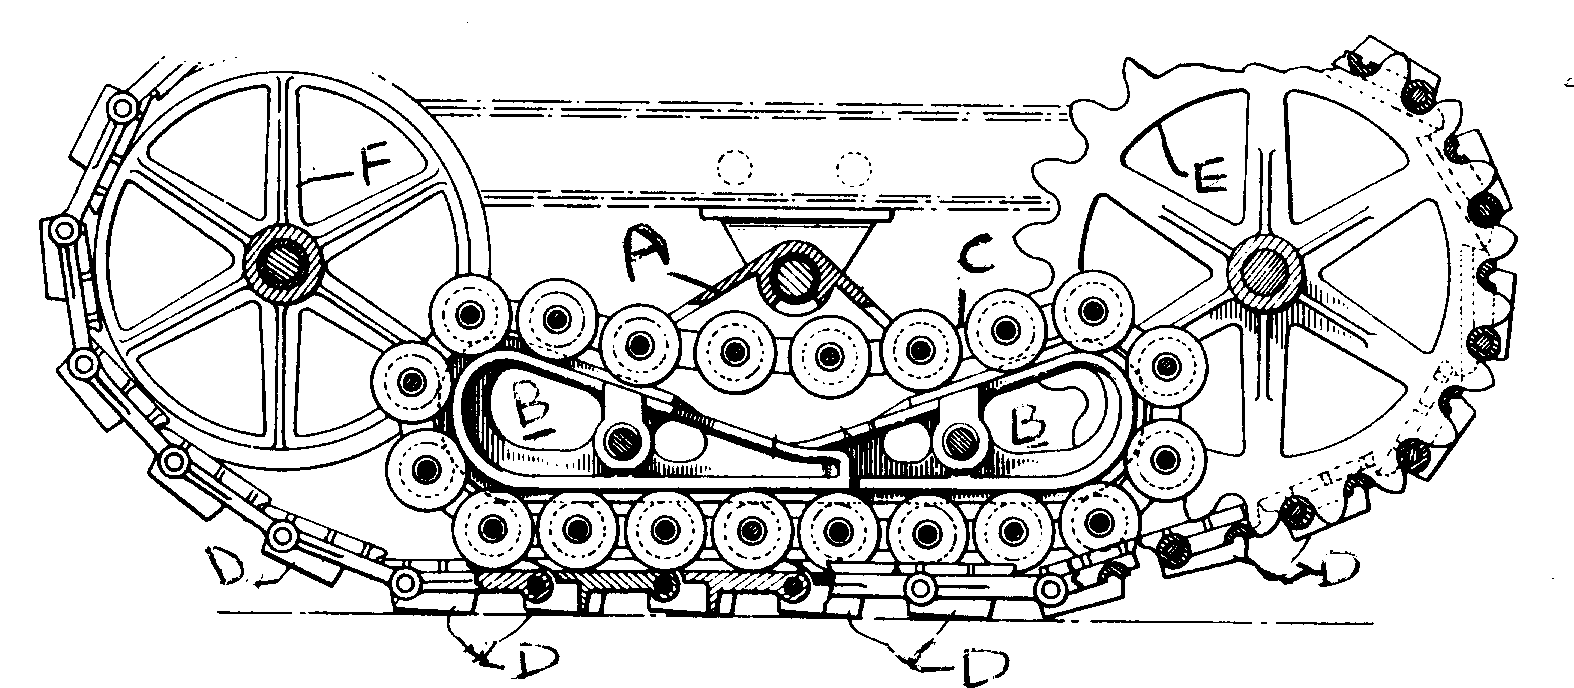 A - Axle hung rocker beam; B - Runner blocks; C - Rollerchain; D - Track lugs; E, F - Sprocket wheels
